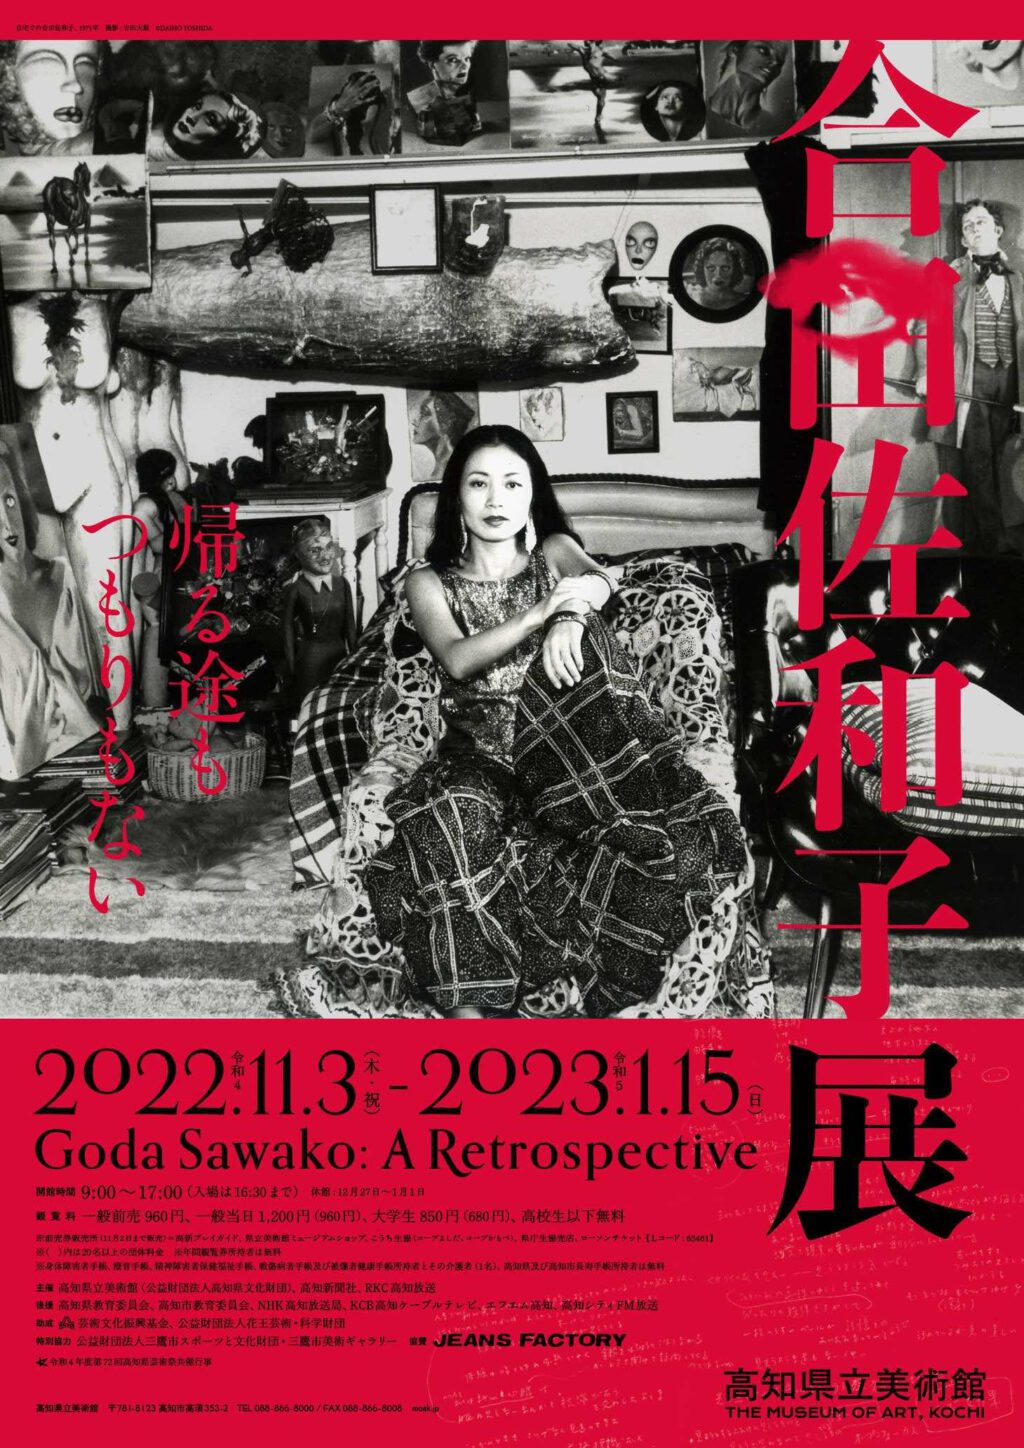 Poster of GODA Sawako’s Retrospective in the Museum of Art, Kochi